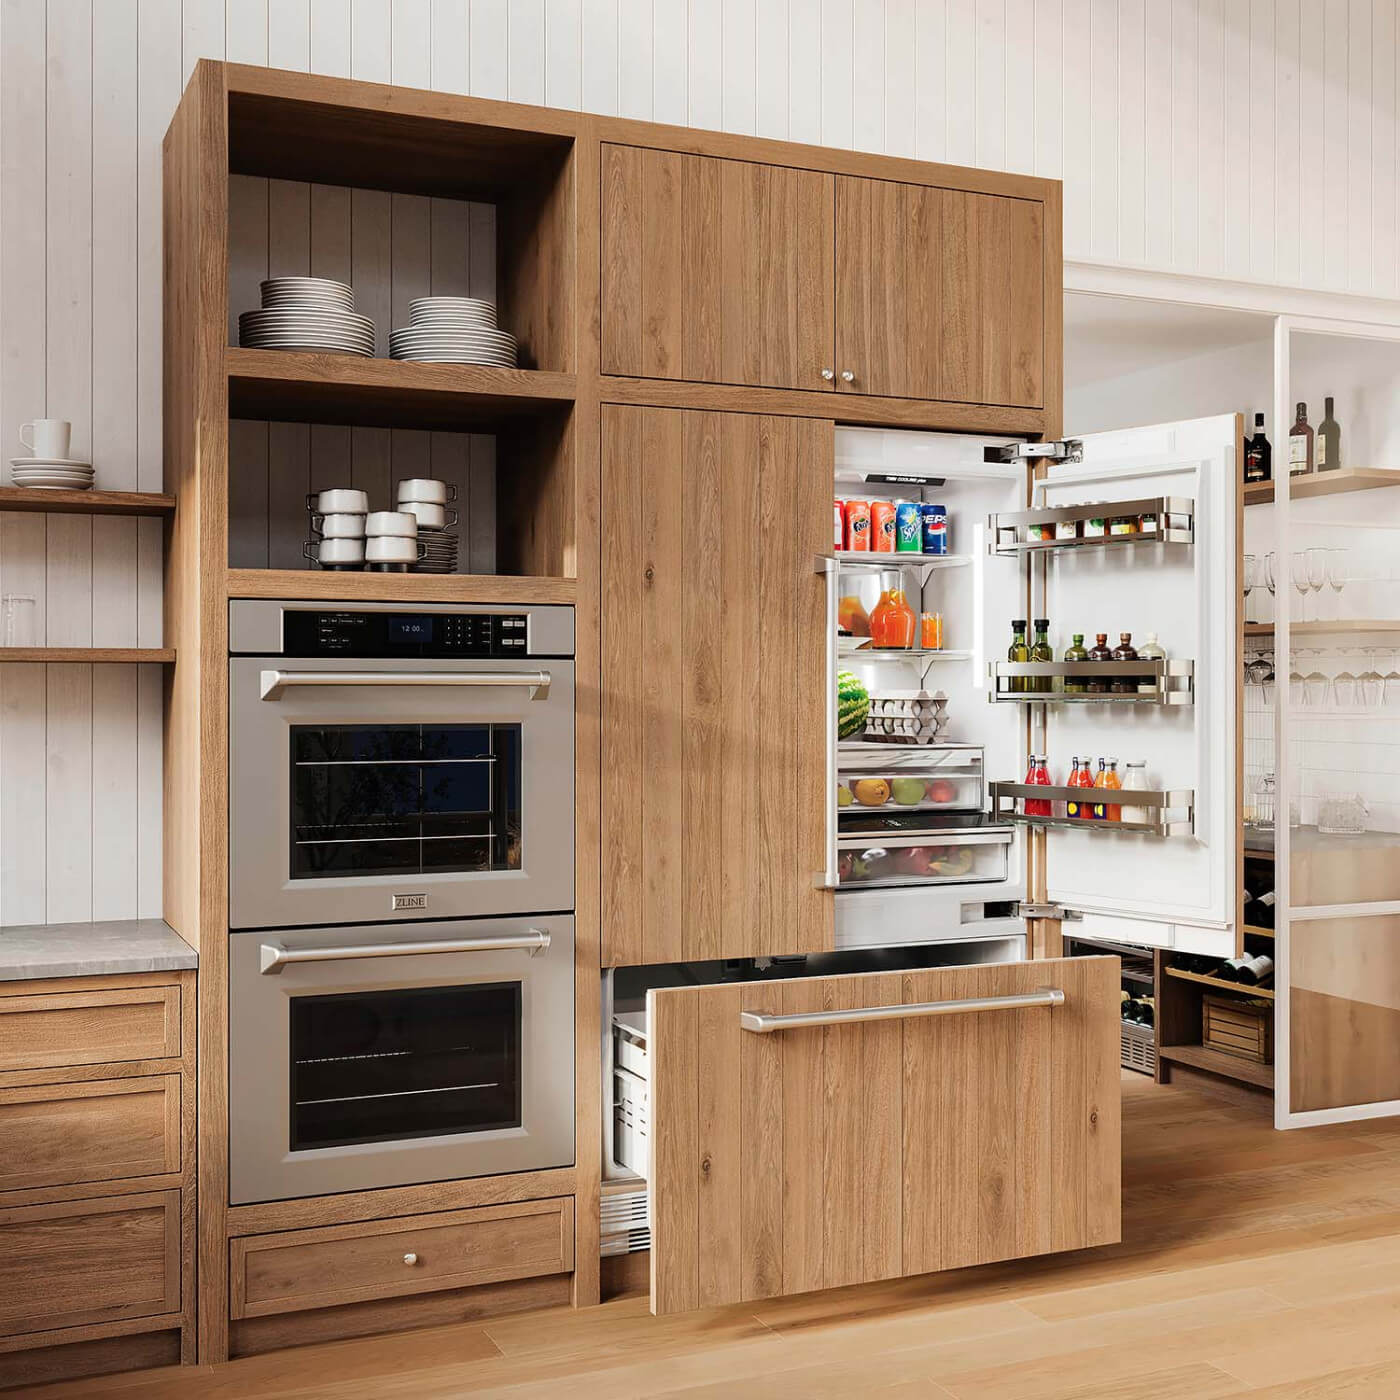 Panel-ready refrigerator with custom wood panel.